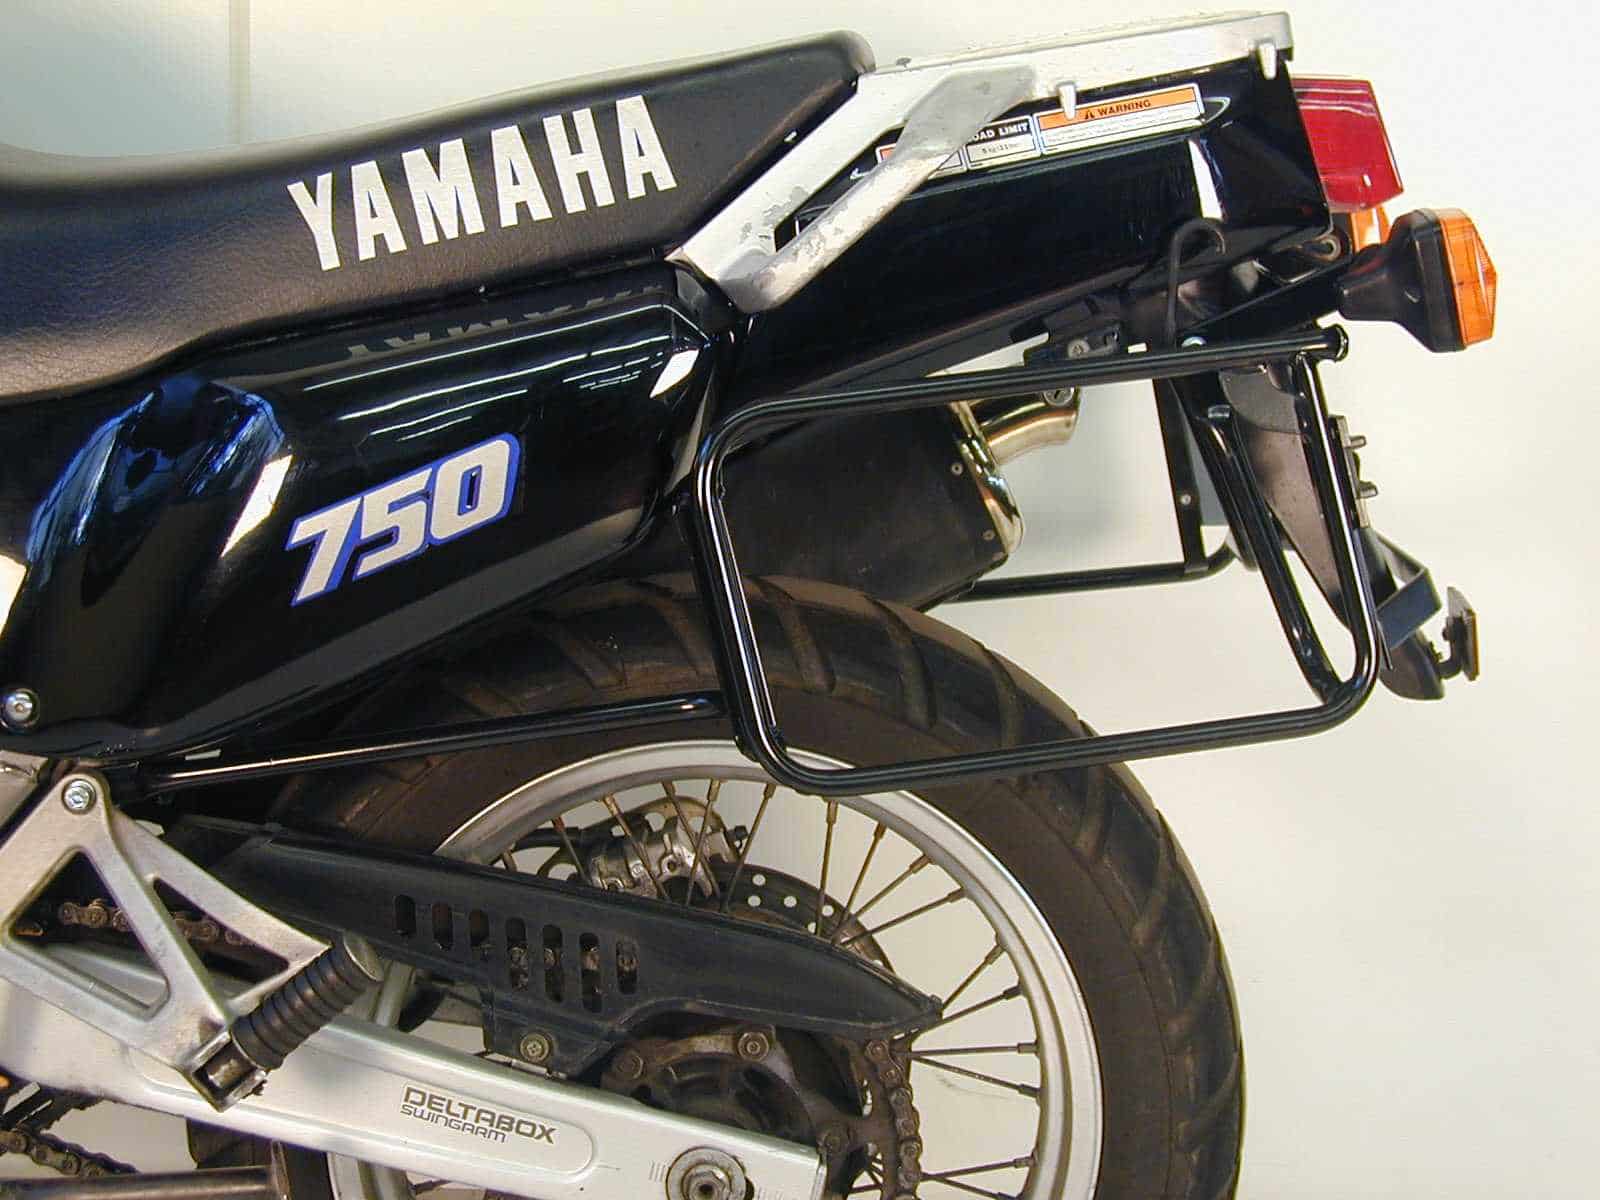 Sidecarrier permanent mounted black for Yamaha XTZ 750 Super Ténéré (1989-1997)